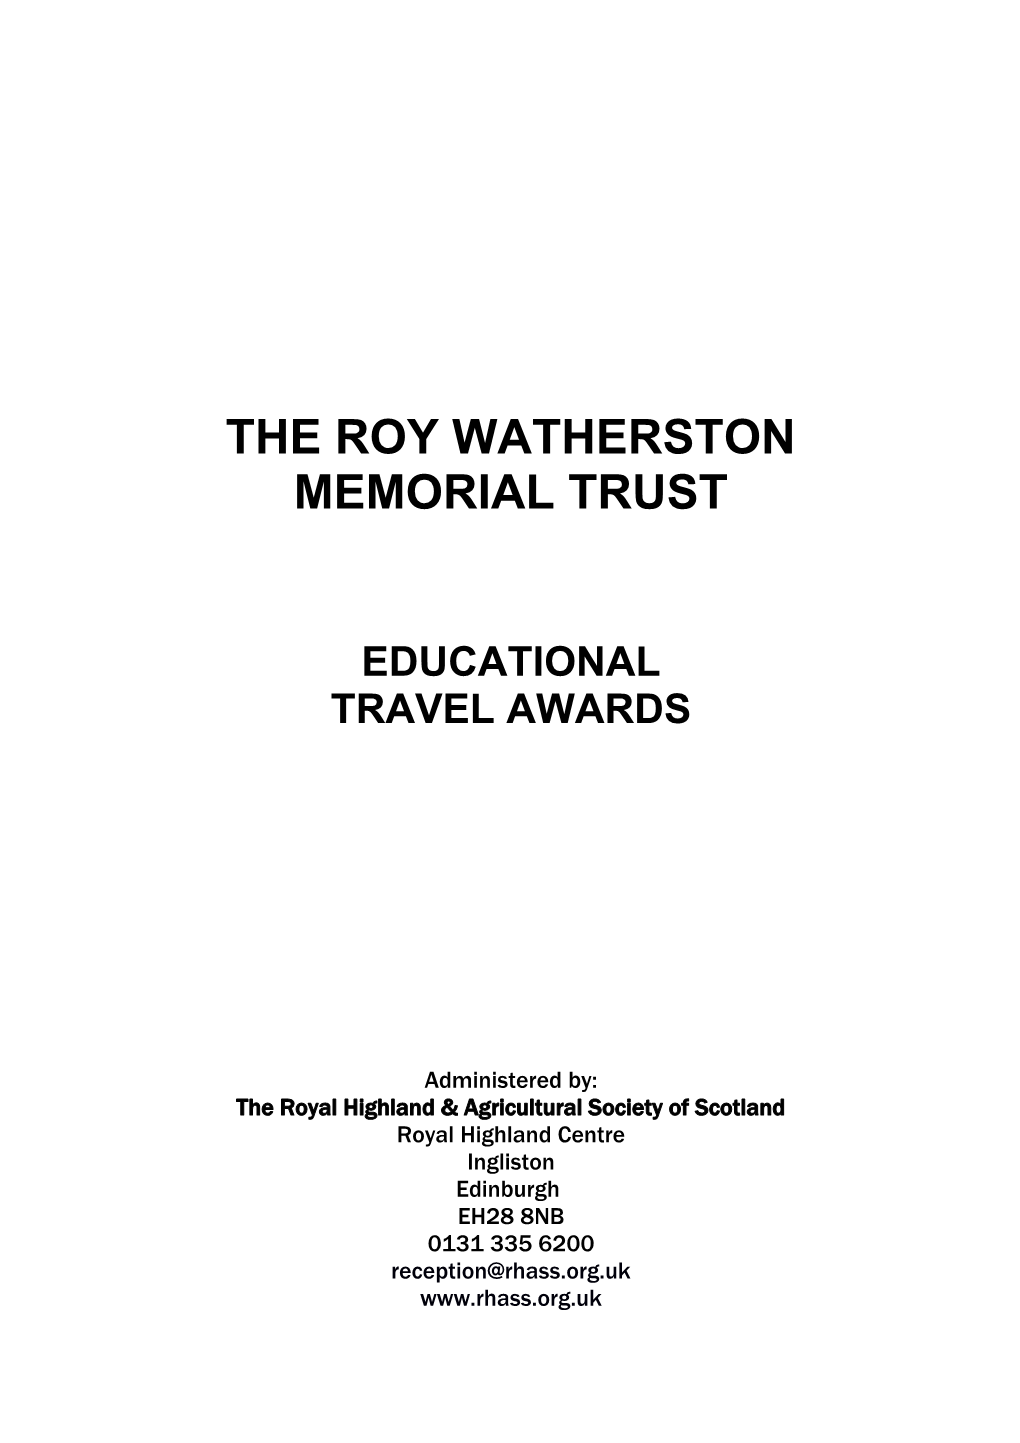 The Roy Watherston